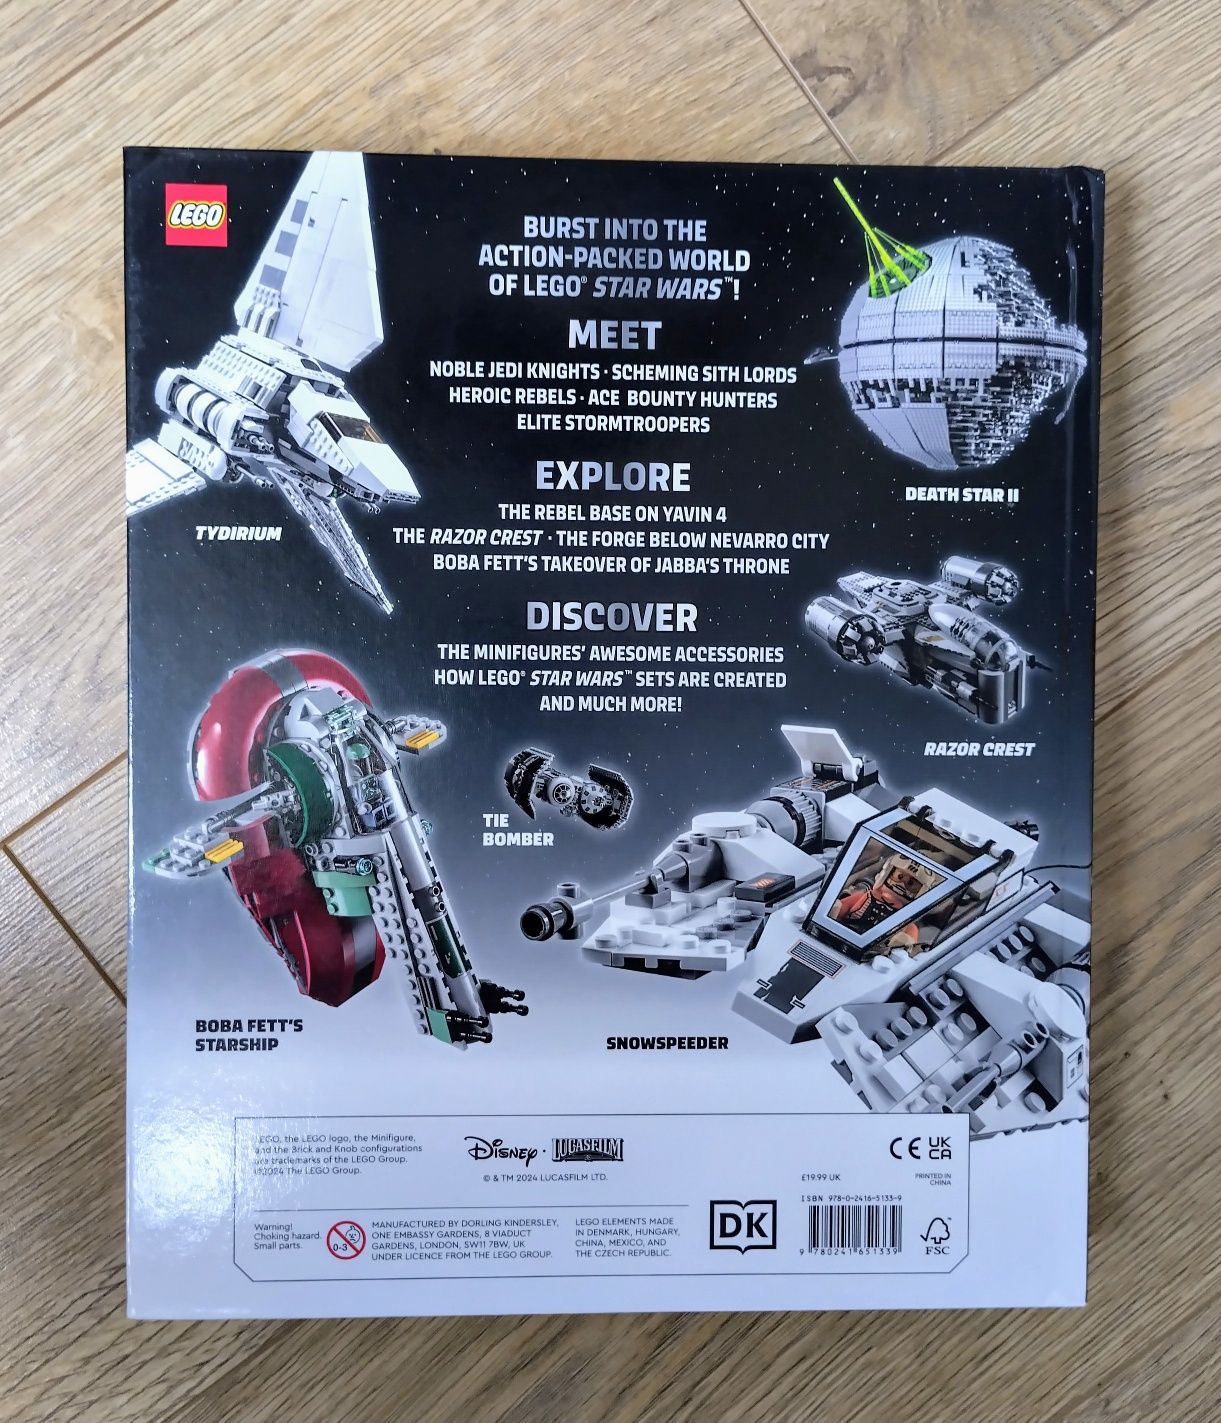 LEGO Star Wars Visual Dictionary